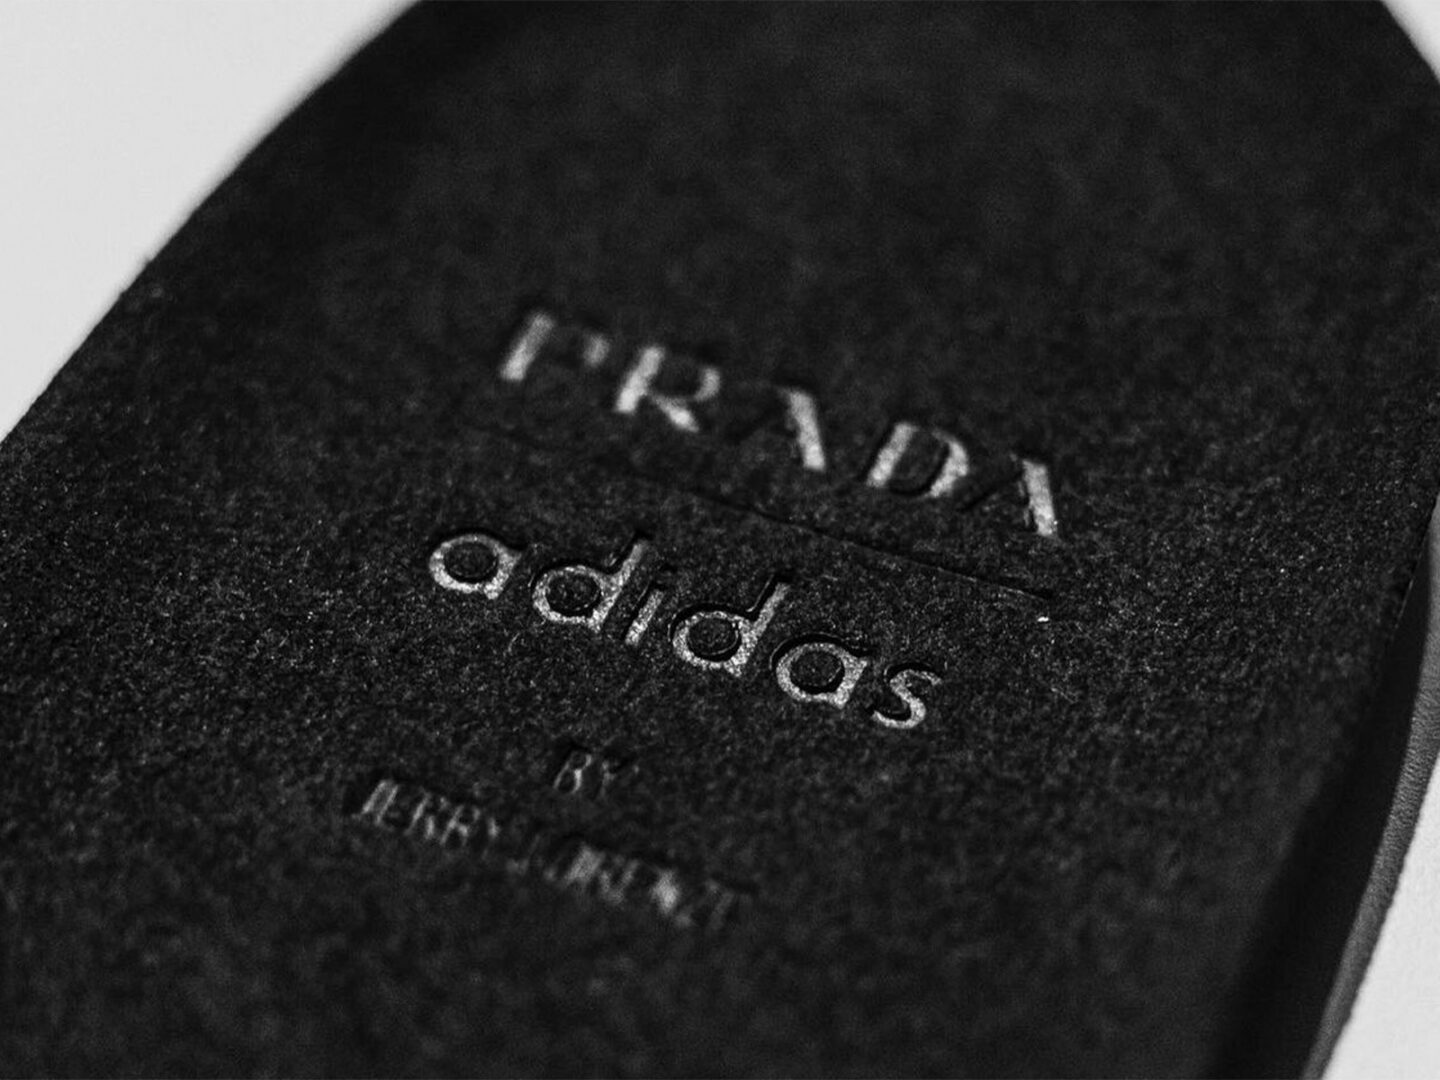 First preview of Prada x adidas by Jerry Lorenzo